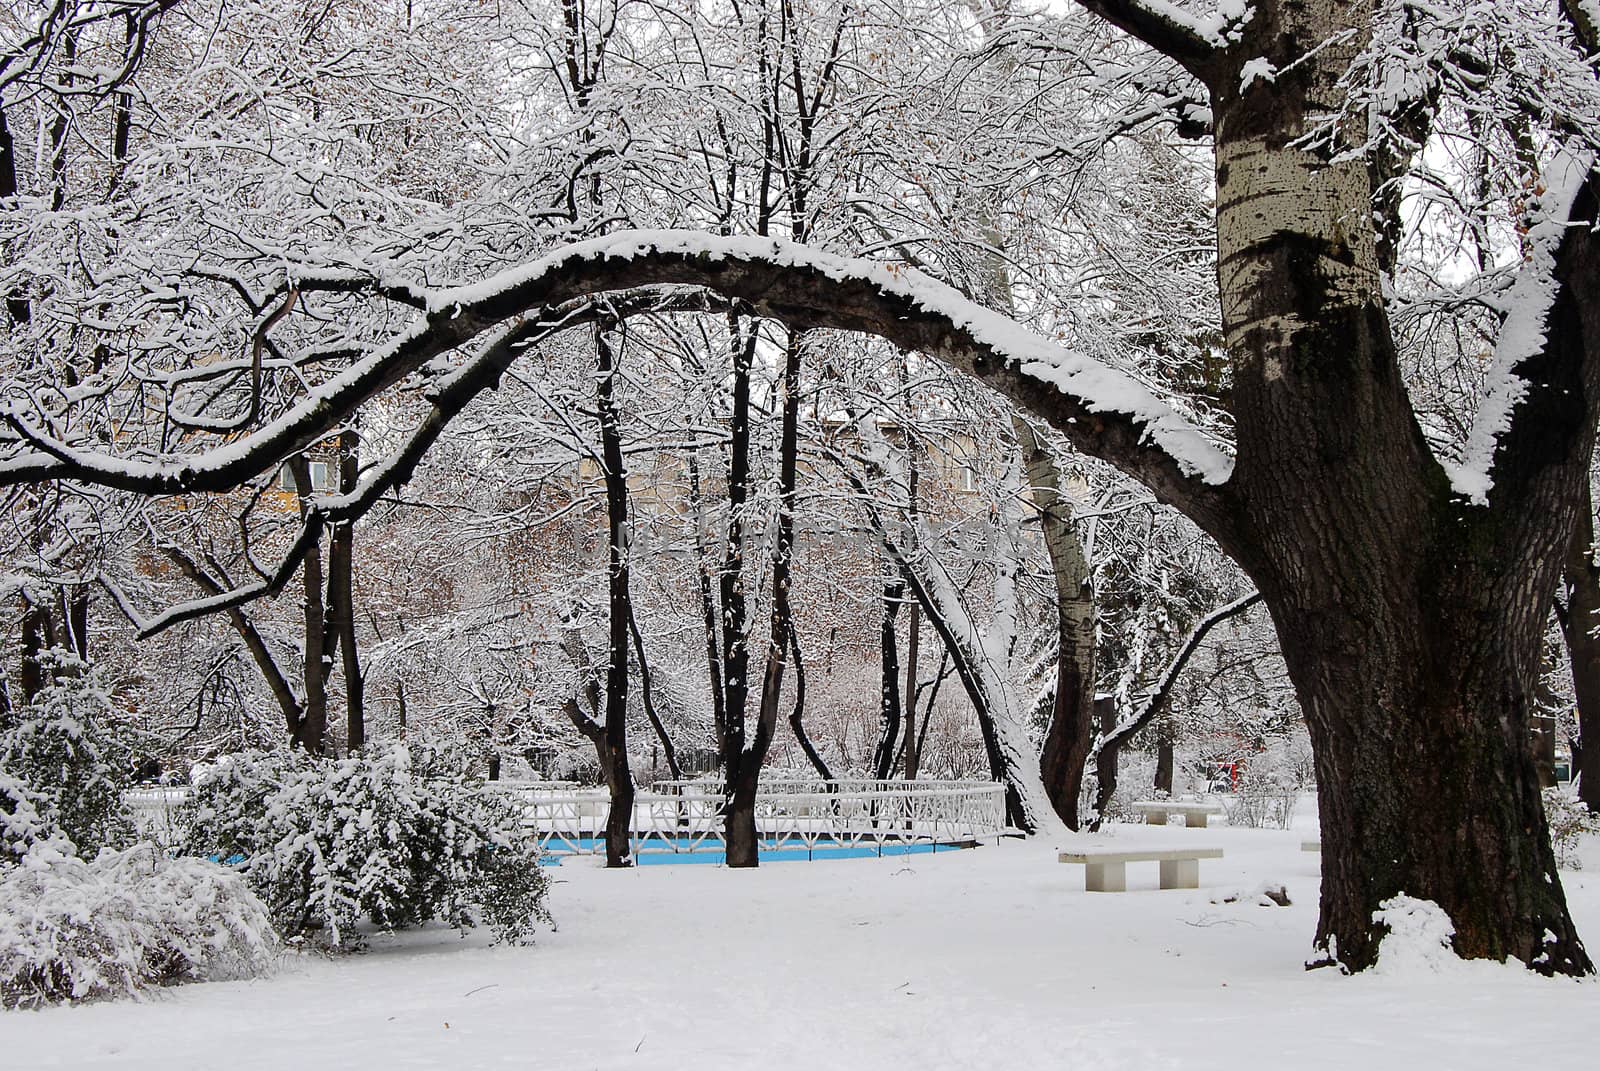 City garden in winter by varbenov